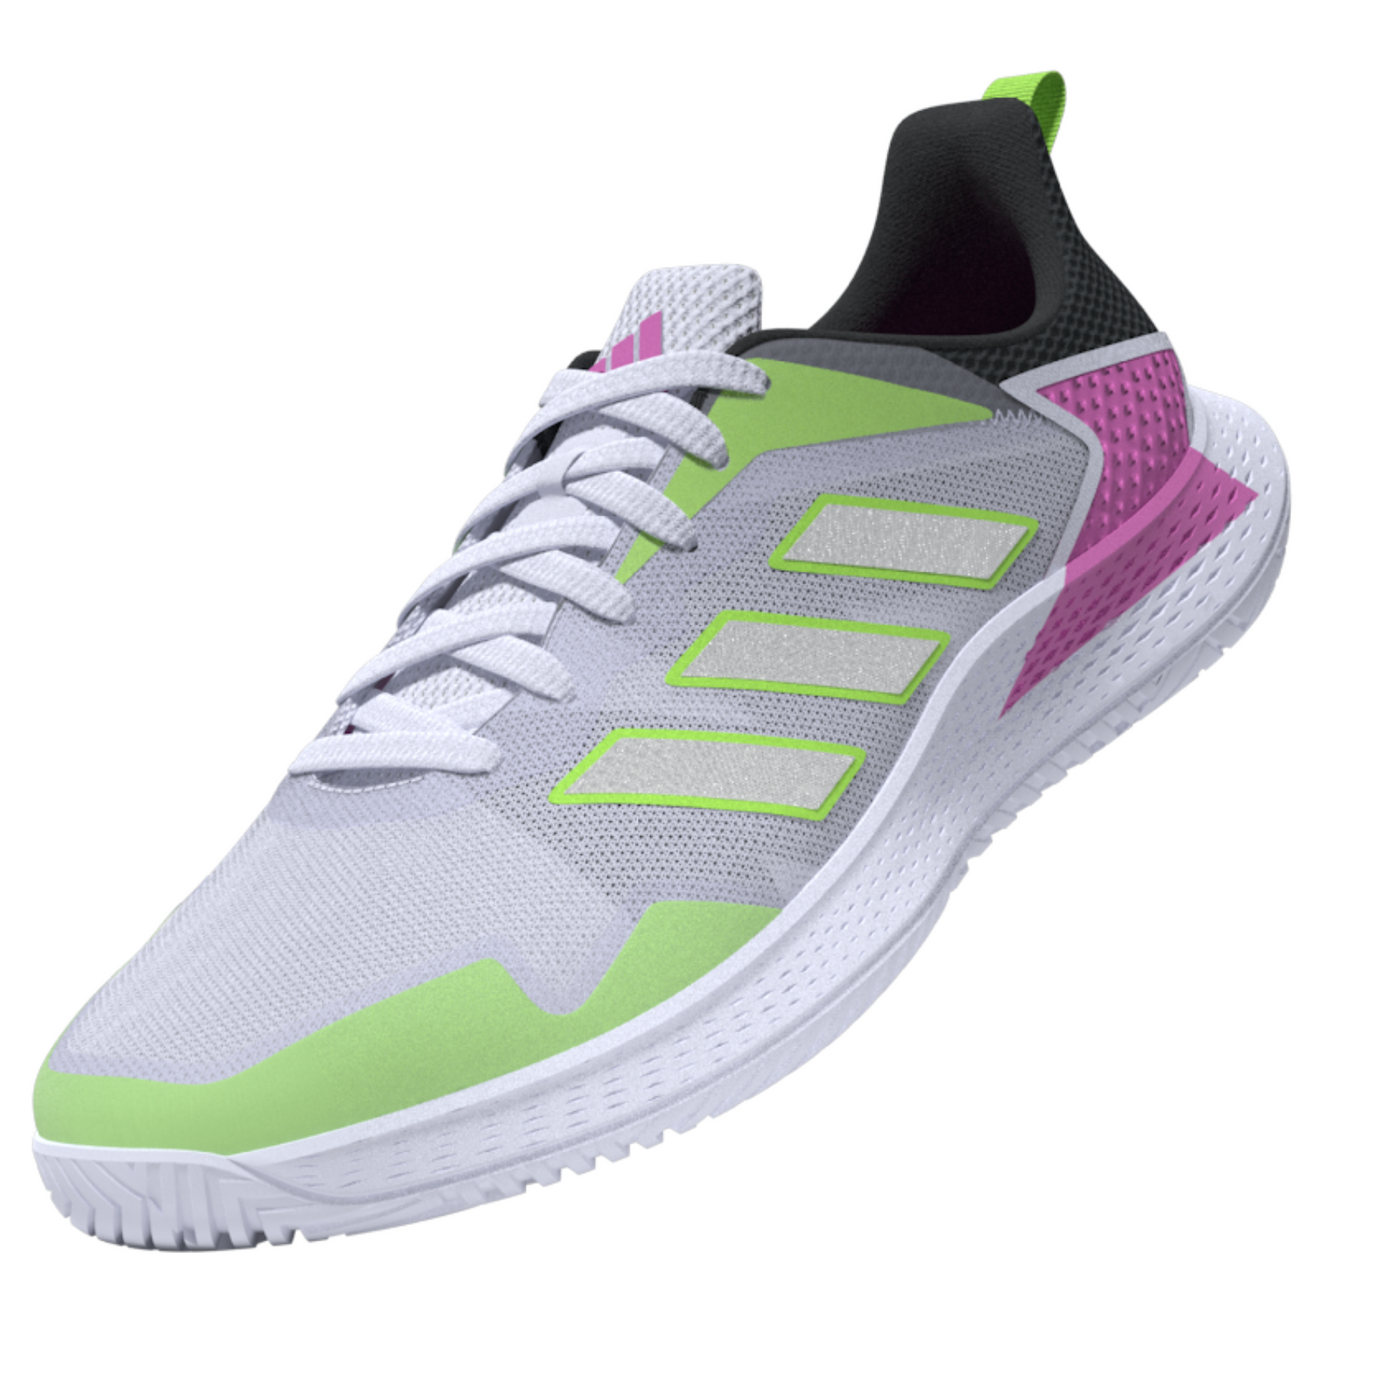 Adidas Performance Defiant Speed Men Tennis Shoes - Crystal White/Silver Metallic/Carbon